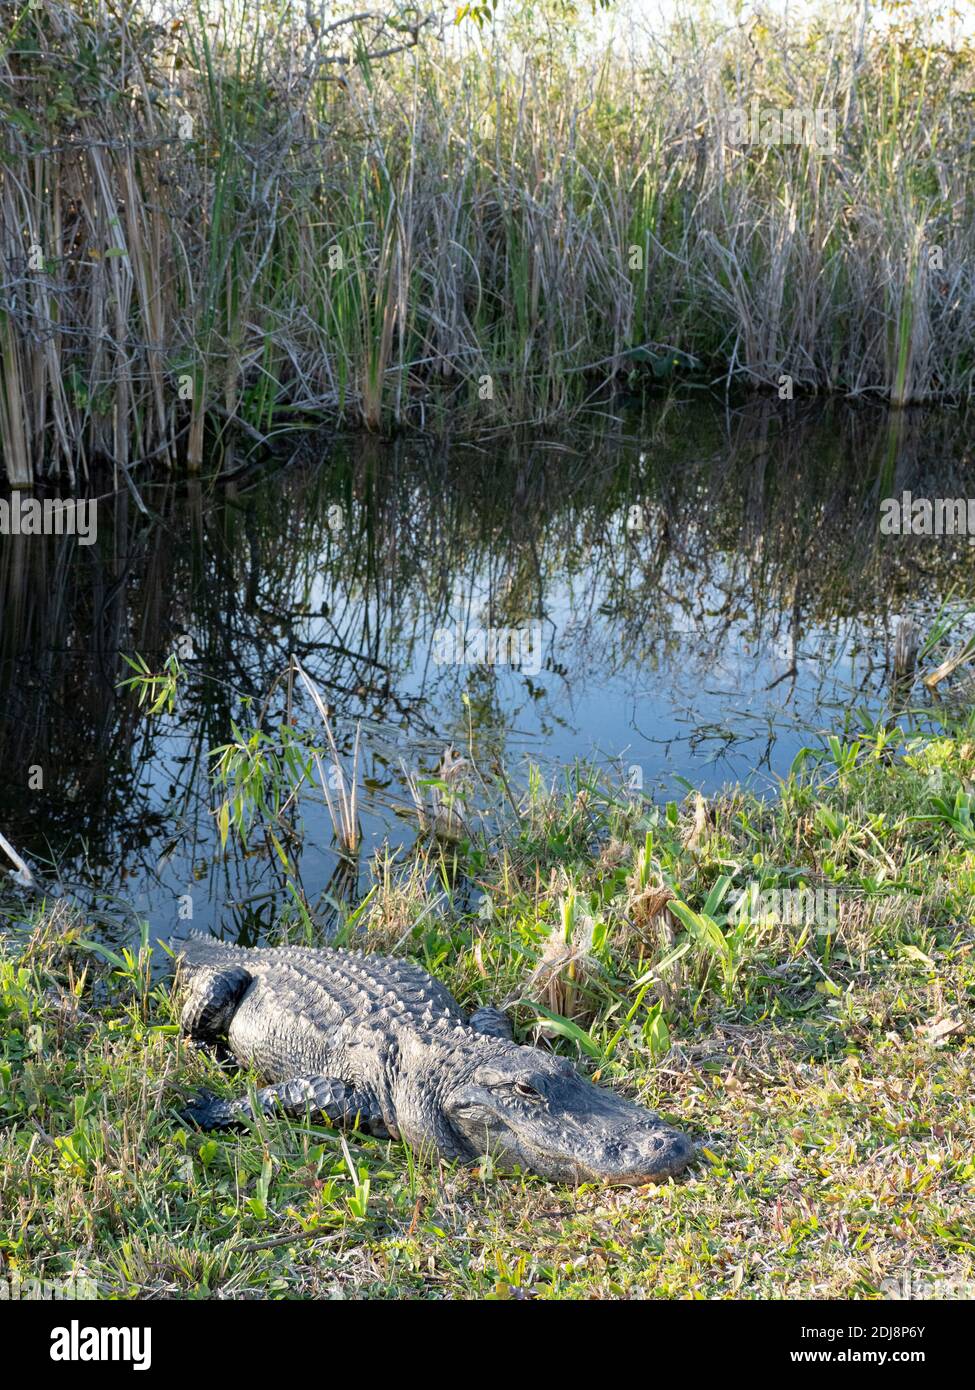 A wild American alligator, Alligator mississippiensis, in Shark Valley, Everglades National Park, Florida, USA. Stock Photo